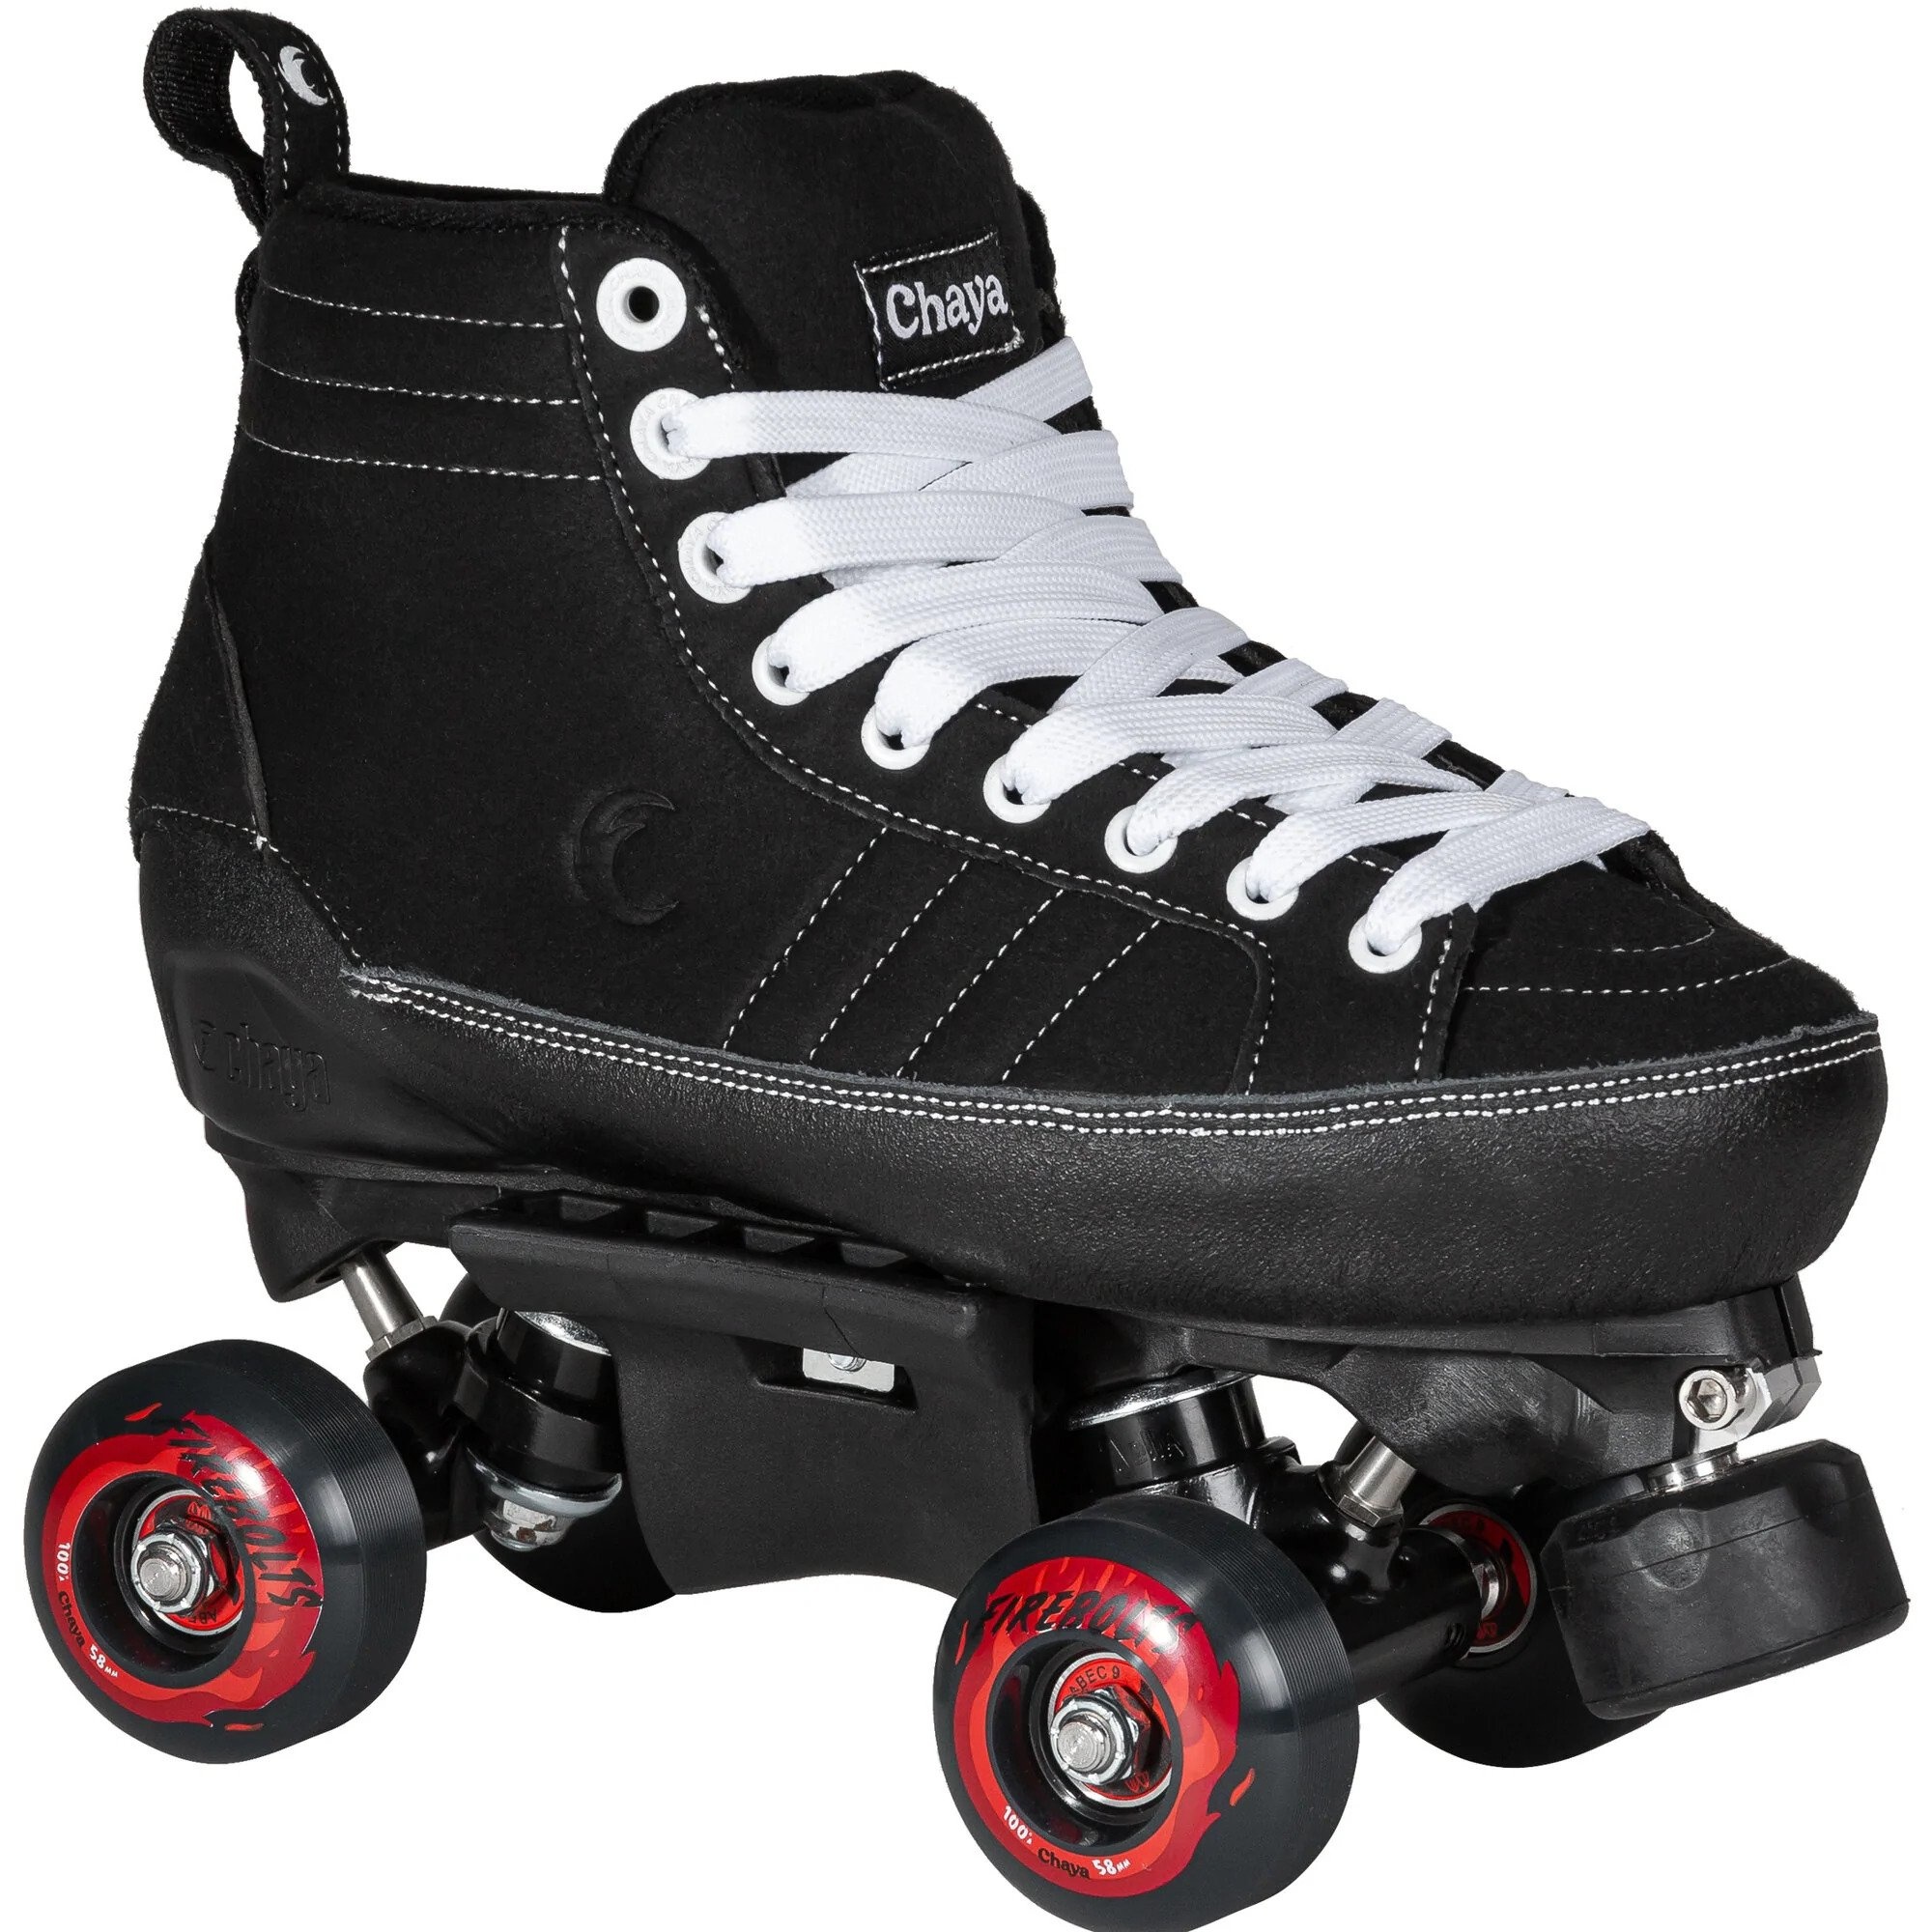 Protective gear for Roller Skating - Sucker Punch Skate Shop